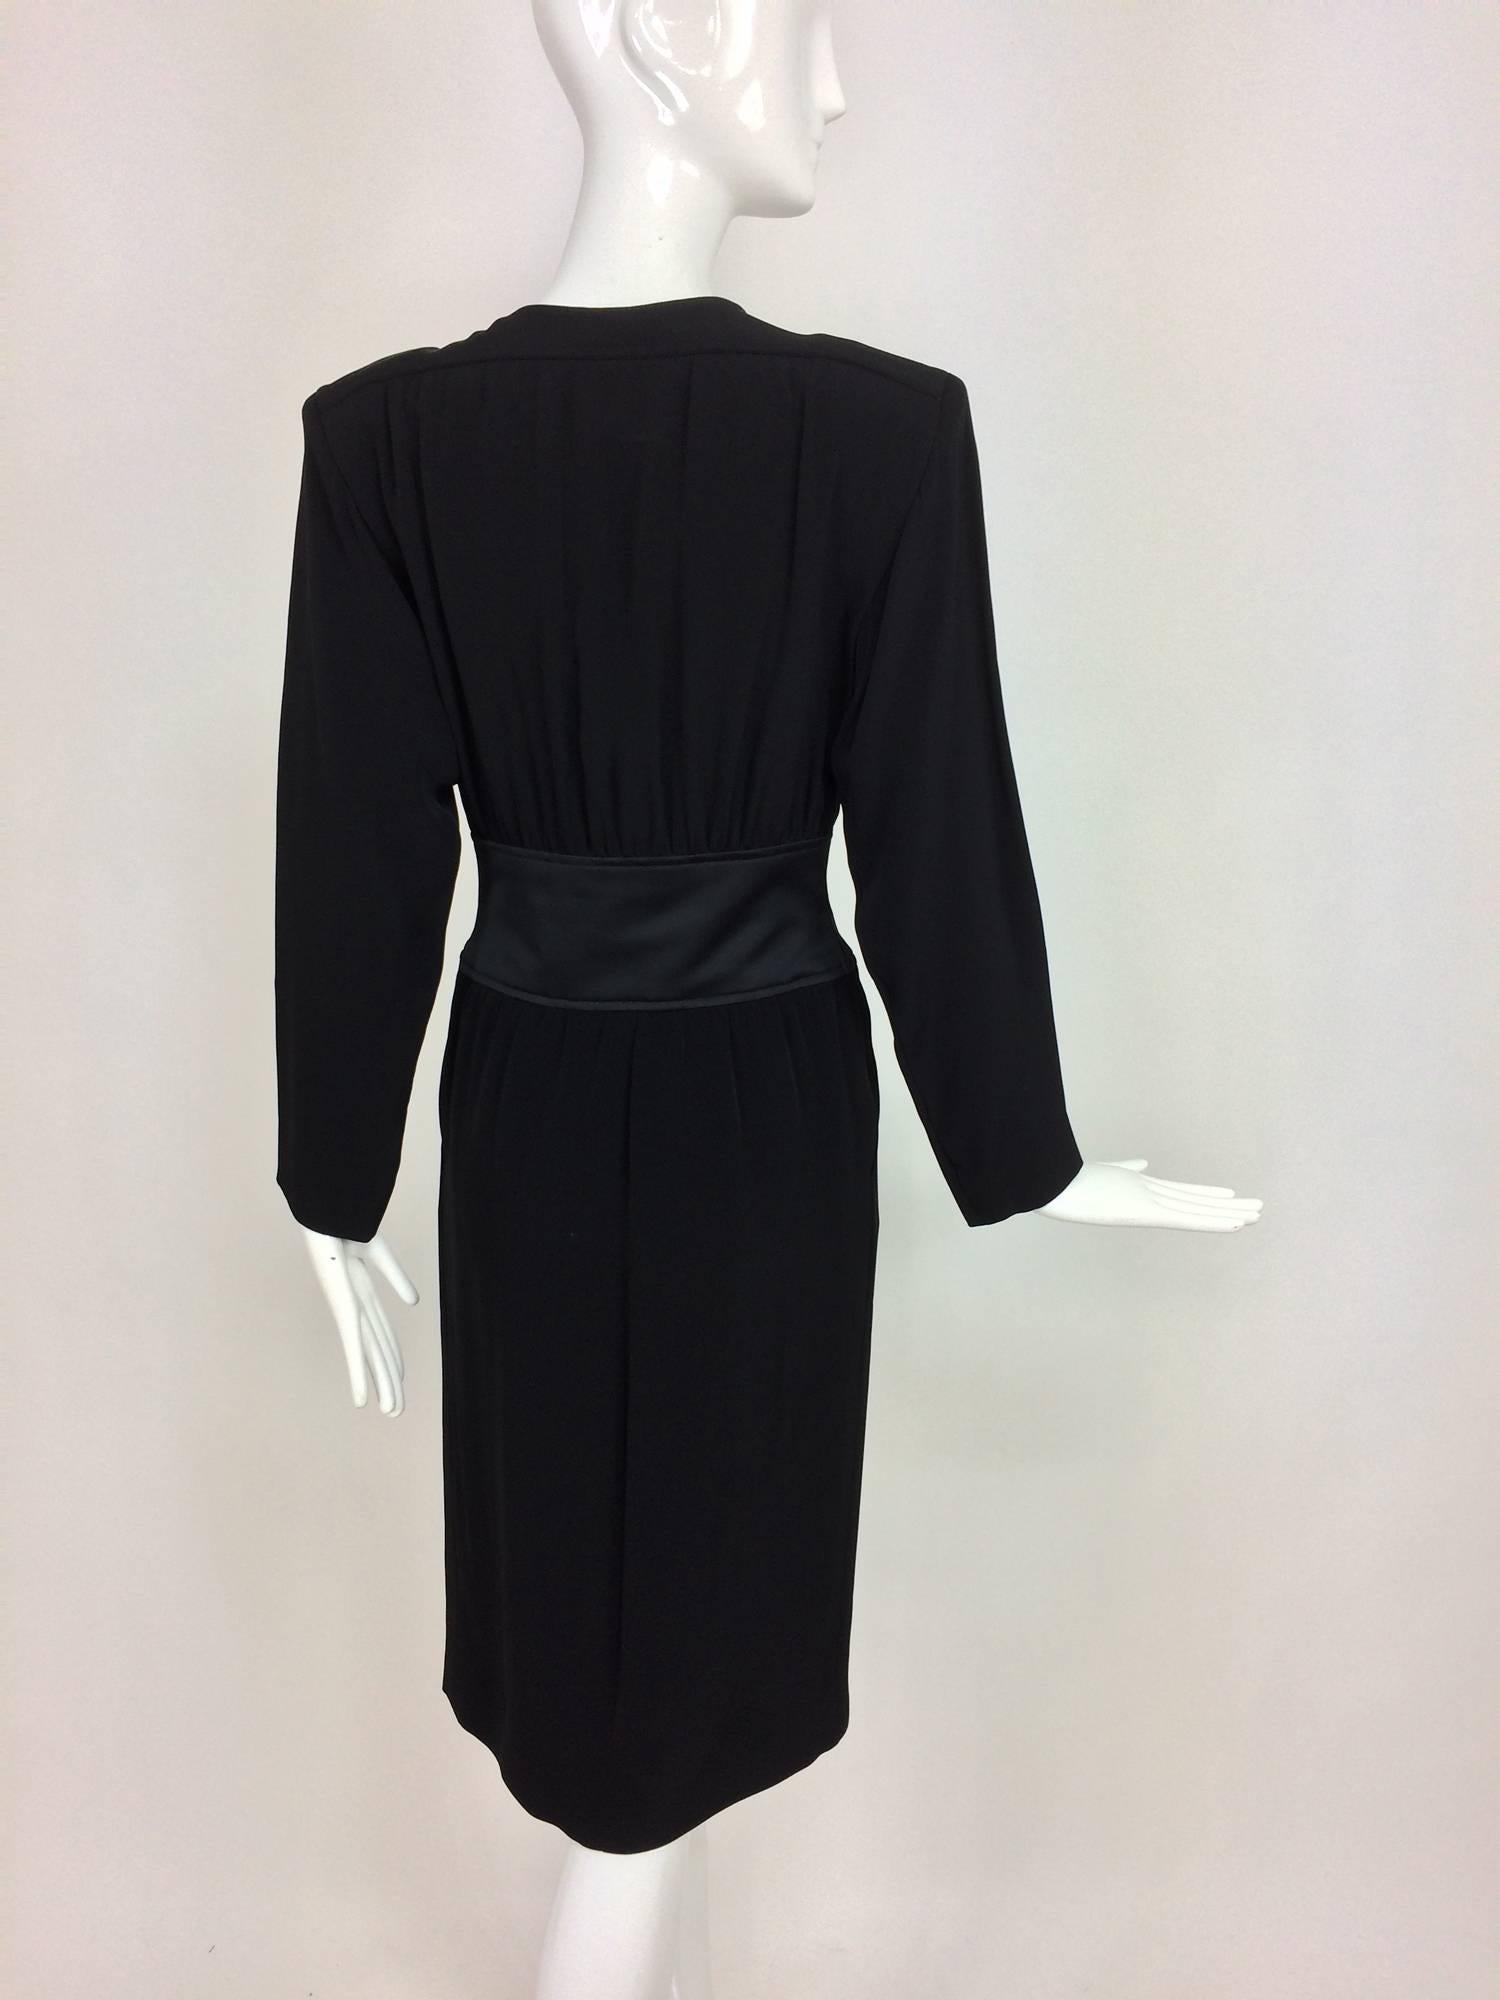 Women's Vintage Yves St Laurent chic black crepe and satin cocktail dress 1990s unworn